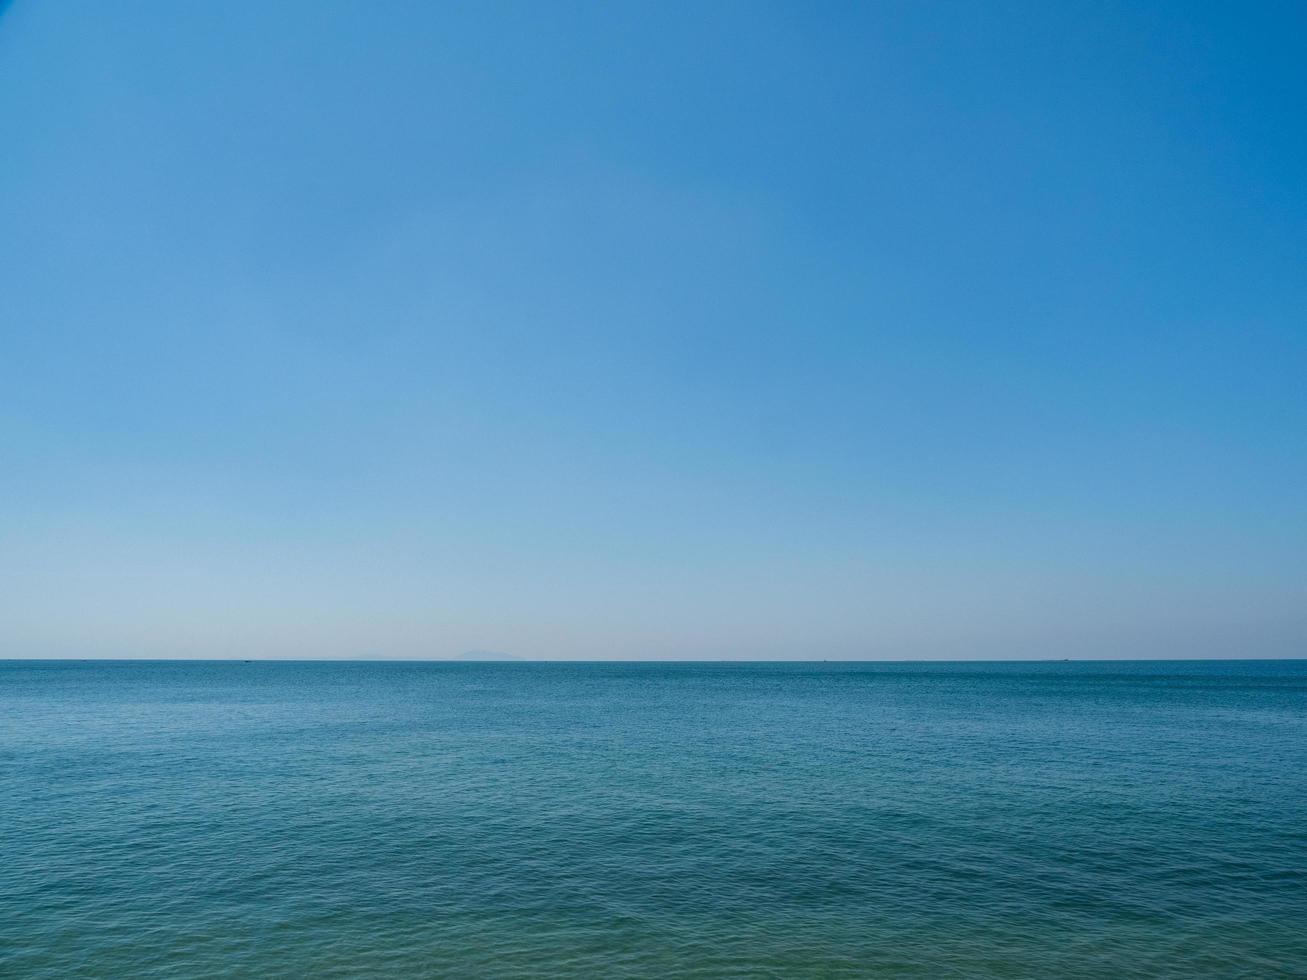 panorama voorkant visie landschap blauw zee en lucht blauw achtergrond ochtend- dag kijken kalmte zomer natuur tropisch zee mooi oceen water reizen bangsaen strand oosten- Thailand chonburi exotisch horizon. foto